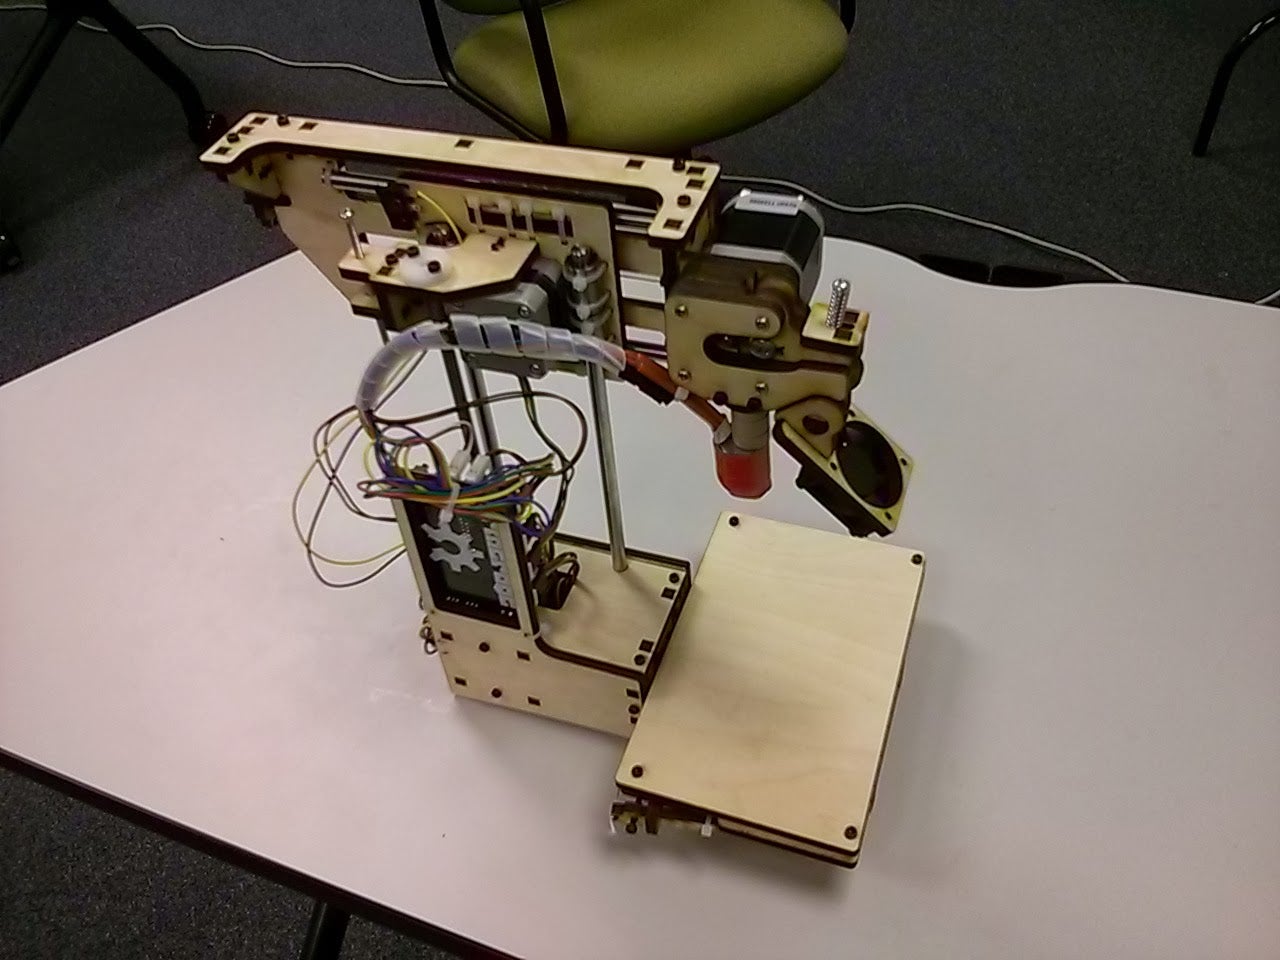 Printrbot Simple Kit - 3D Printer - Assembled